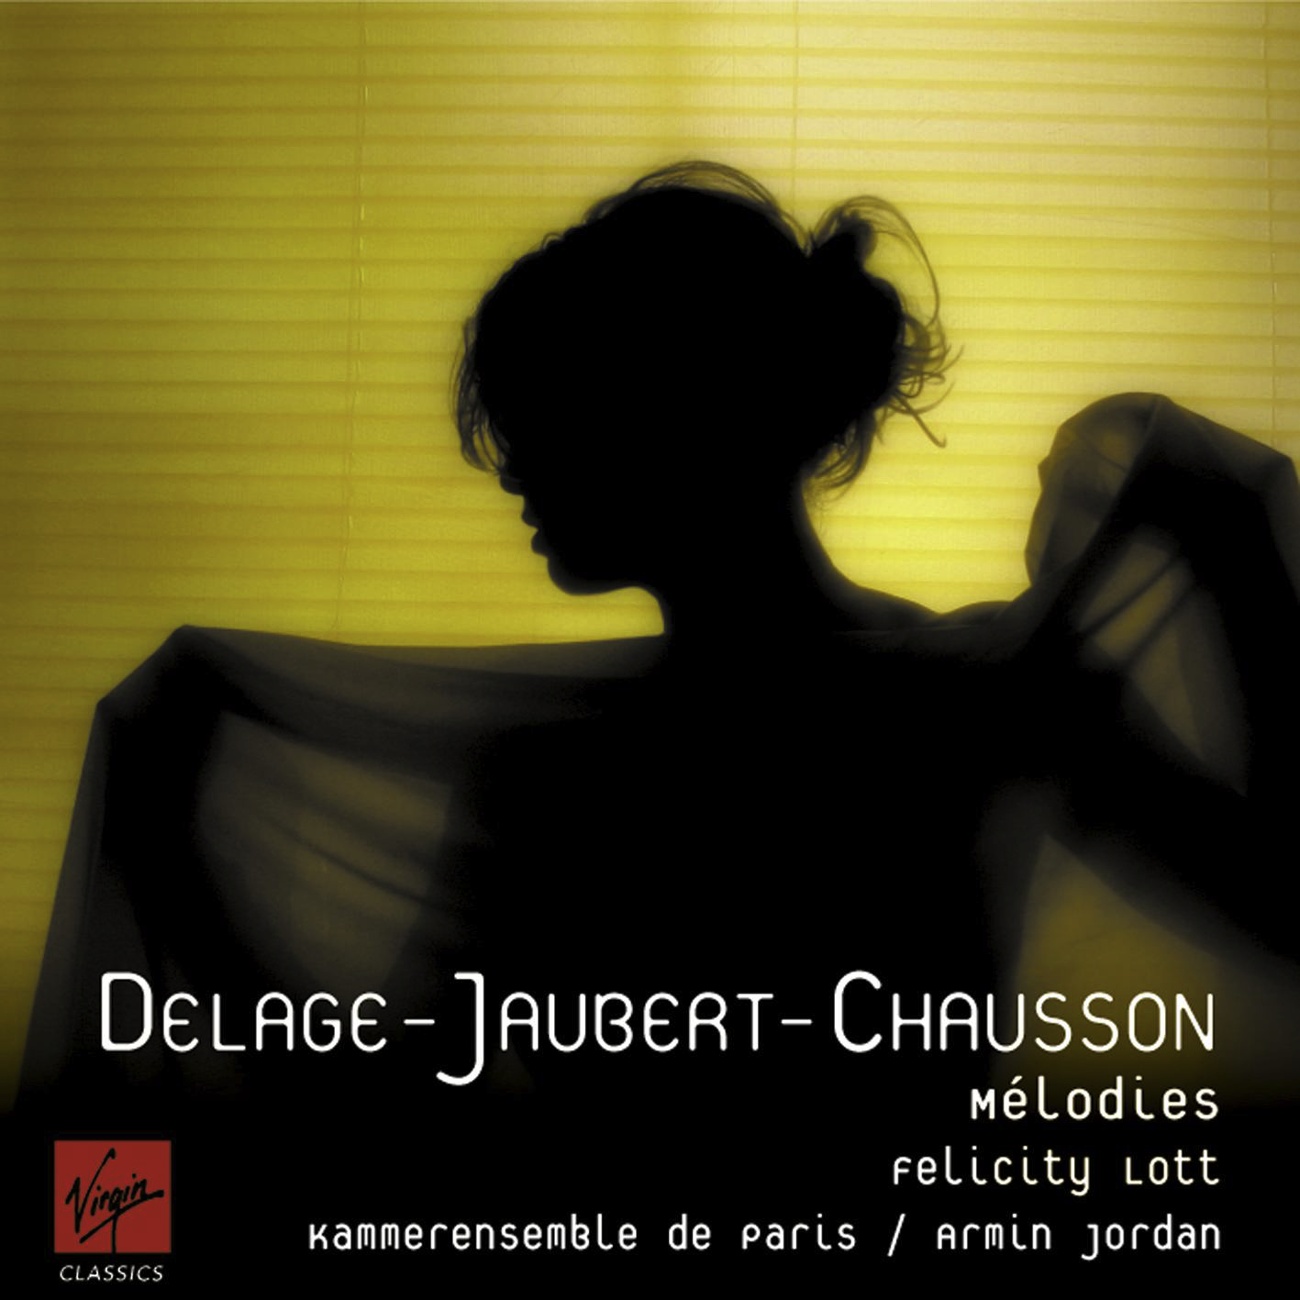 Delage Jaubert Chausson: Me lodies